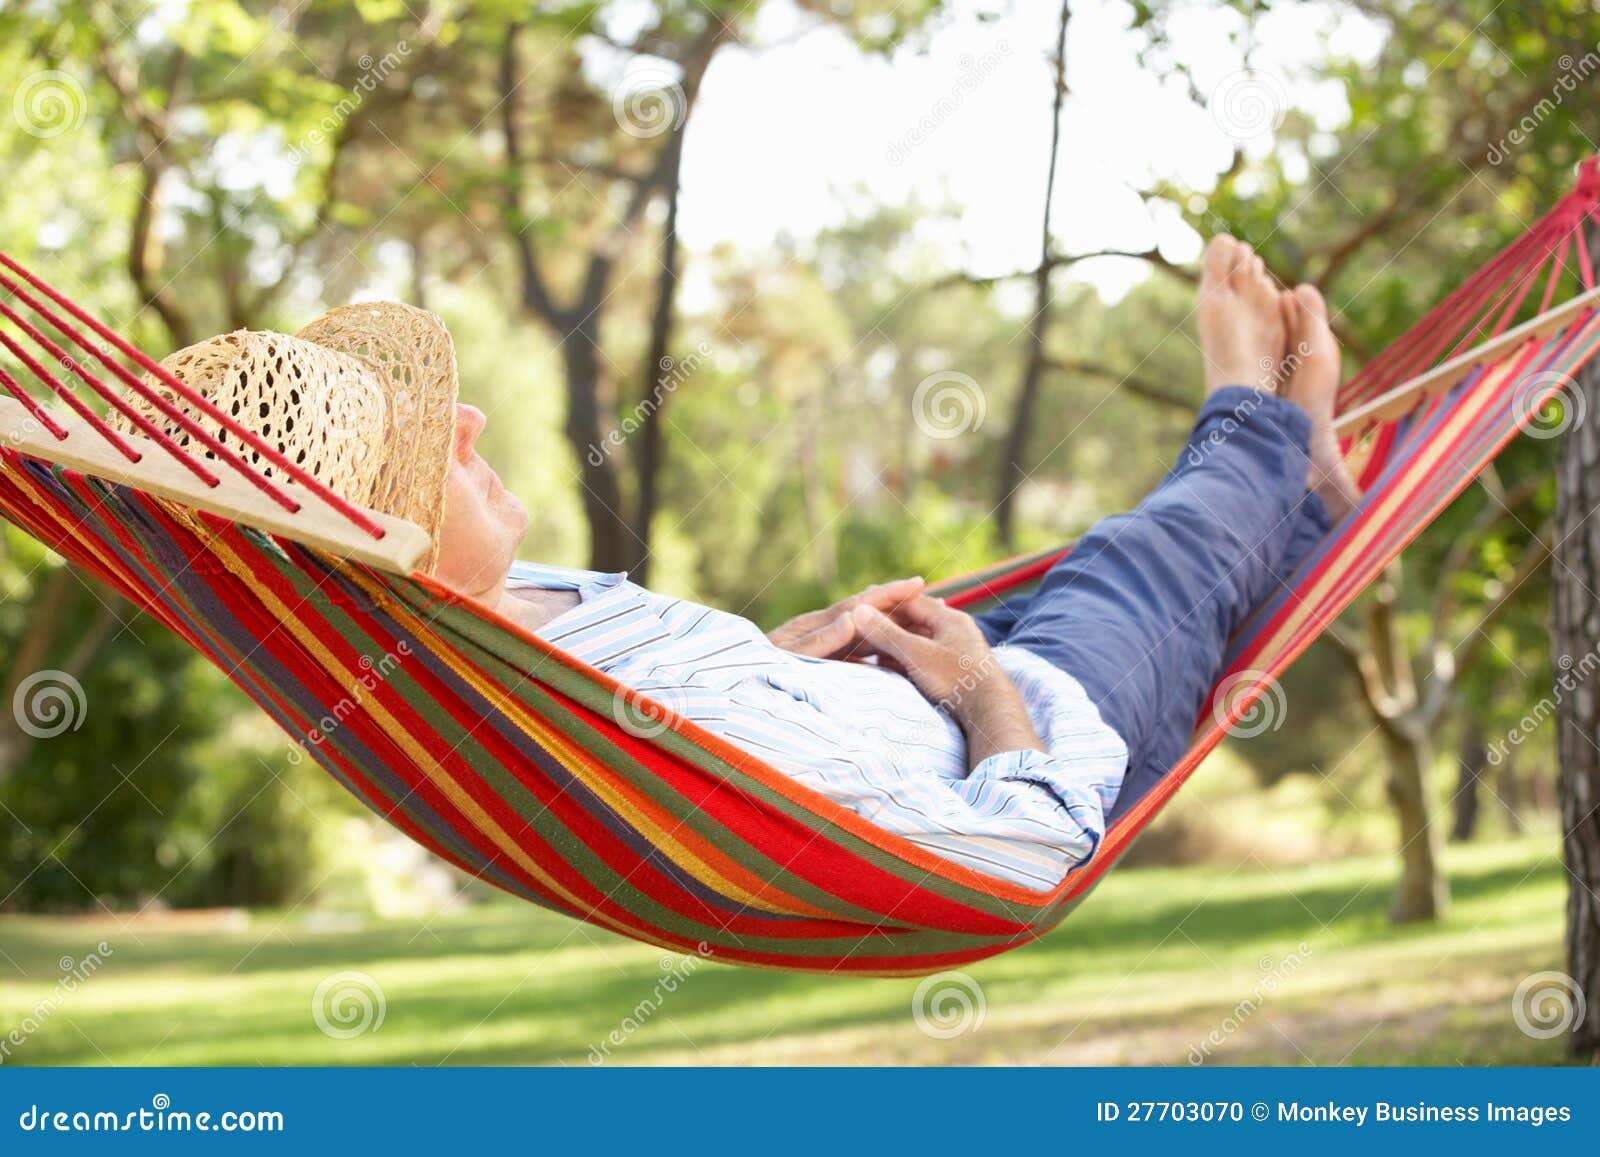 senior man relaxing in hammock